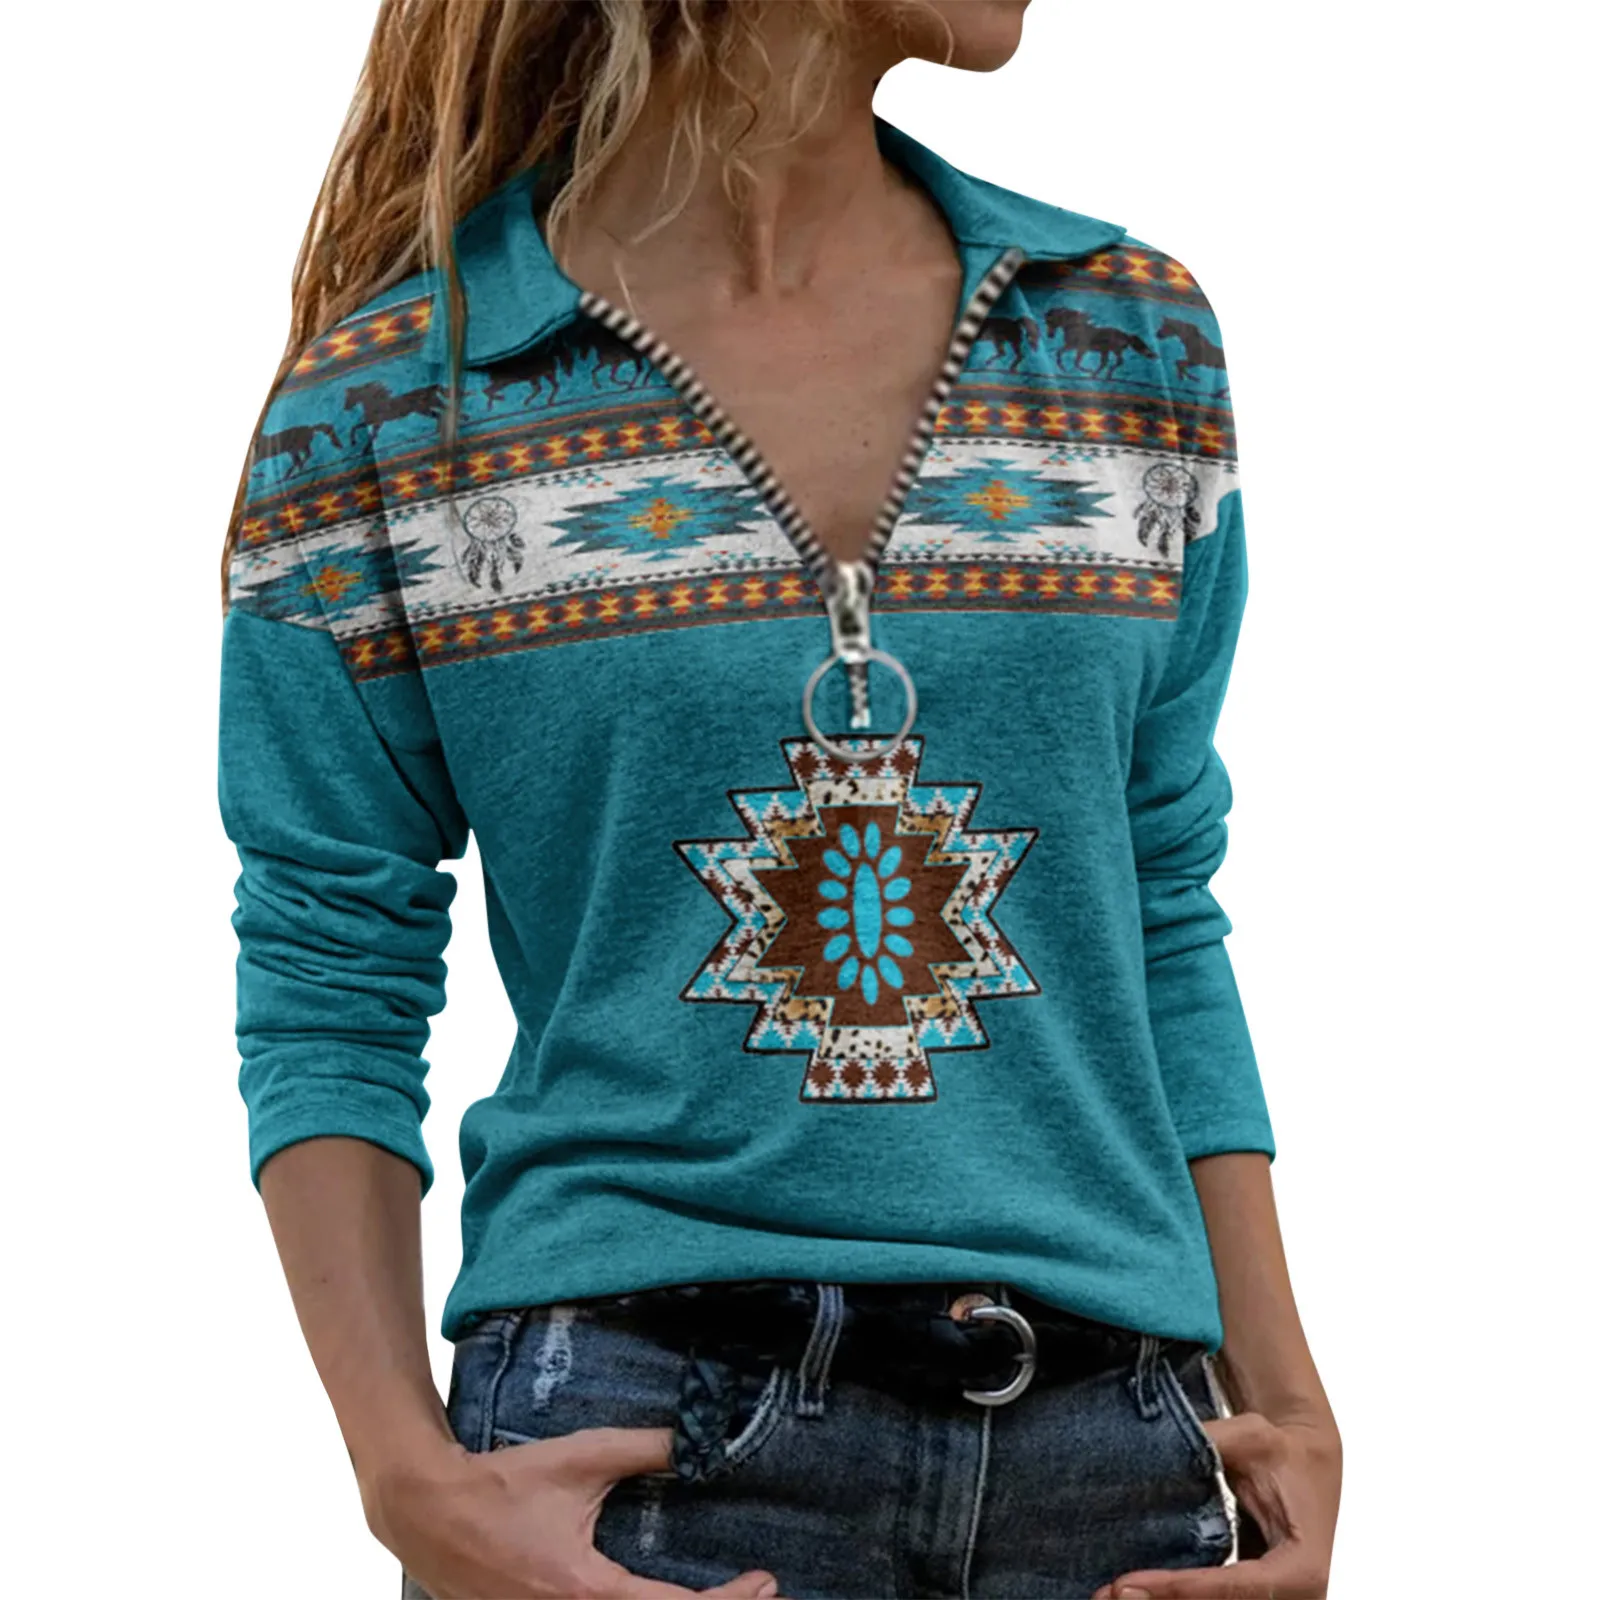 Kleding Dameskleding Tops & T-shirts Tunieken Prachtige geweven Huilpil-Mexicaanse wol-zwart-turkoois-blouse-top-tuniek-westen-zuidwesten-boho-inheemse-wol-traditionele-vogels 